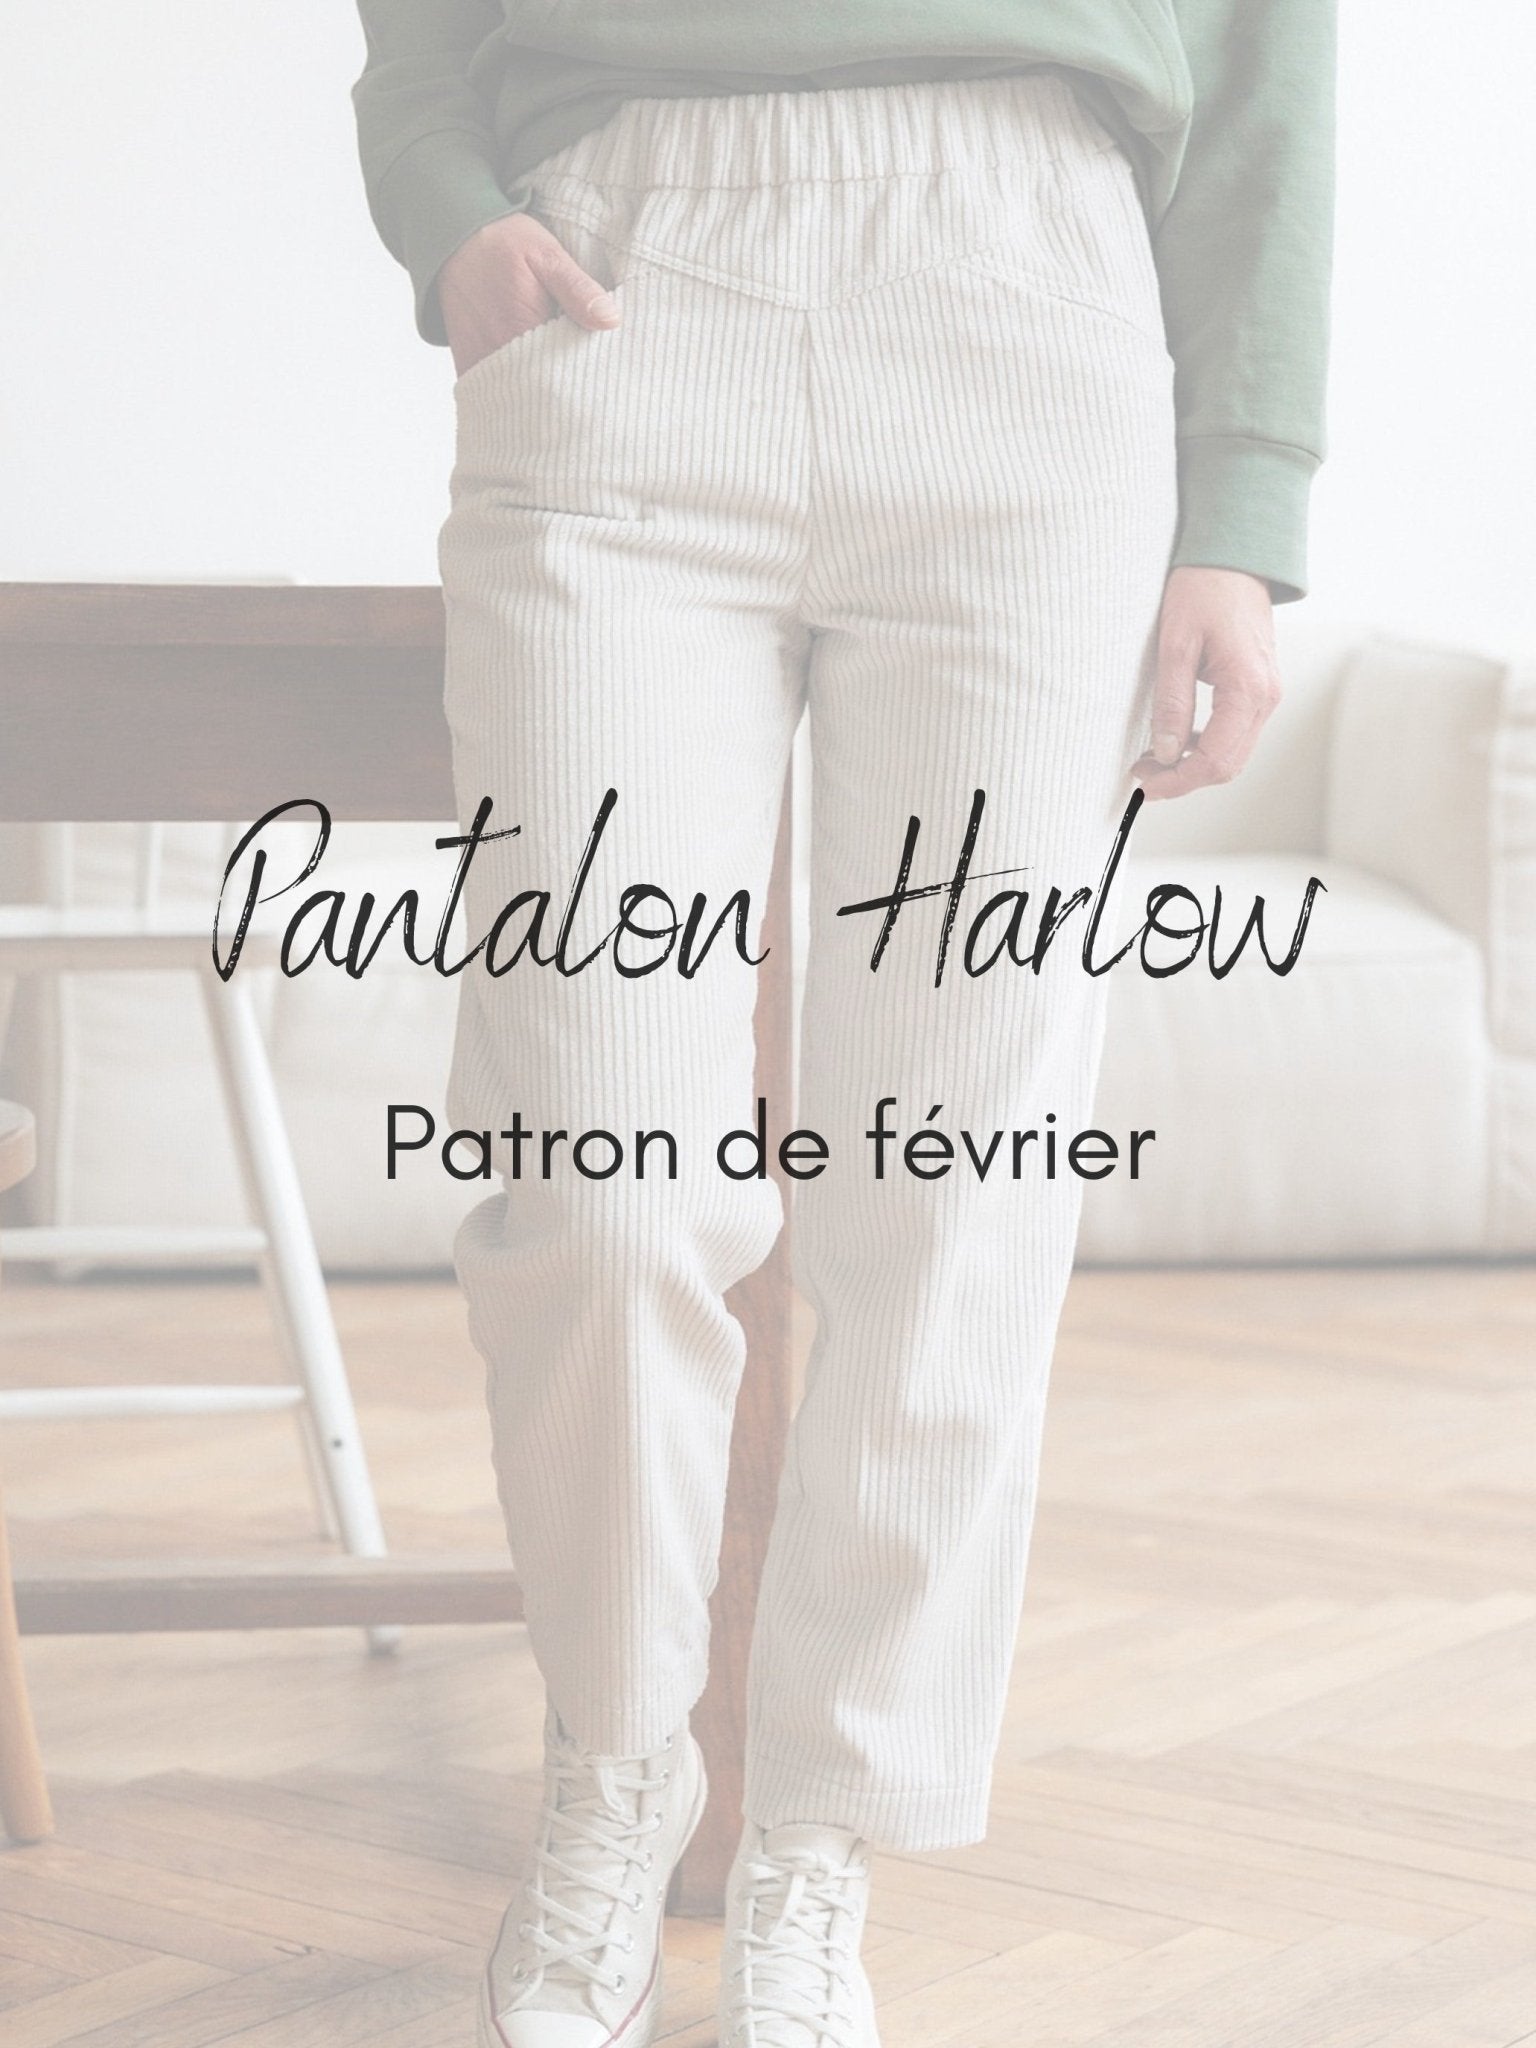 Pantalon Harlow - Patron Couture PDF - Joli Lab